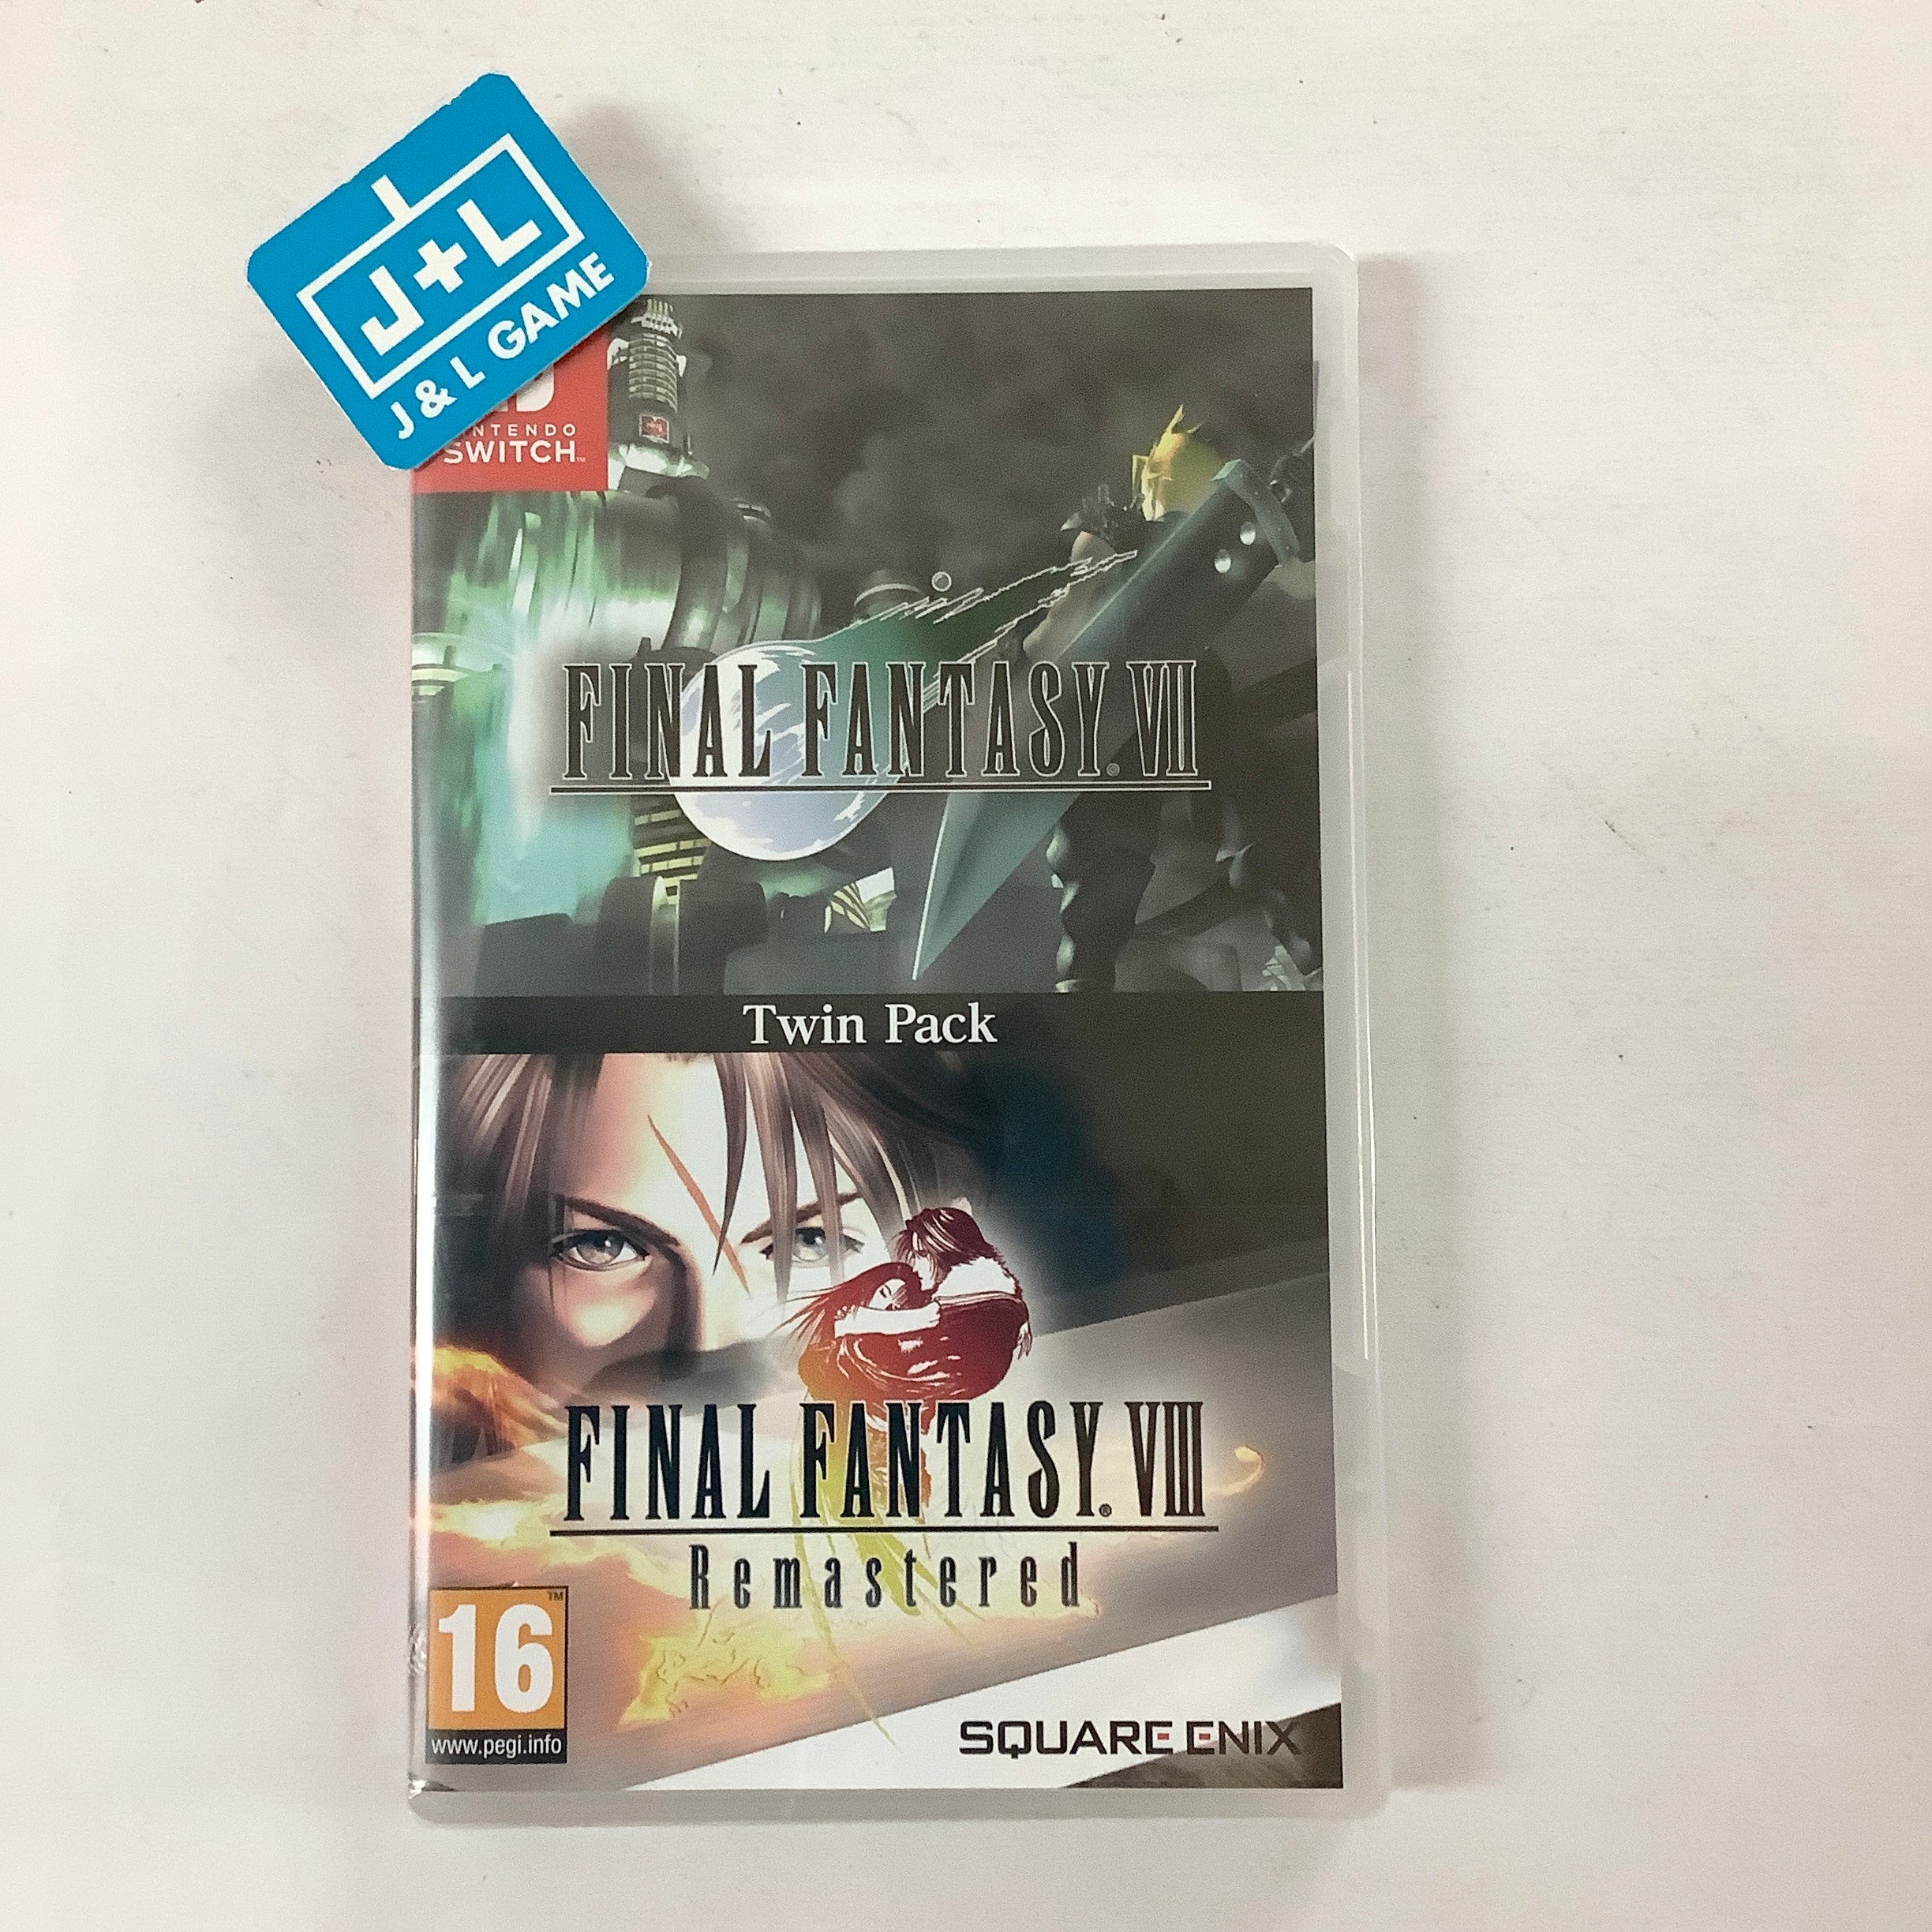 Final Fantasy VII & Final Fantasy VIII Remastered Twin Pack - (NSW) Nintendo Switch (European Import)